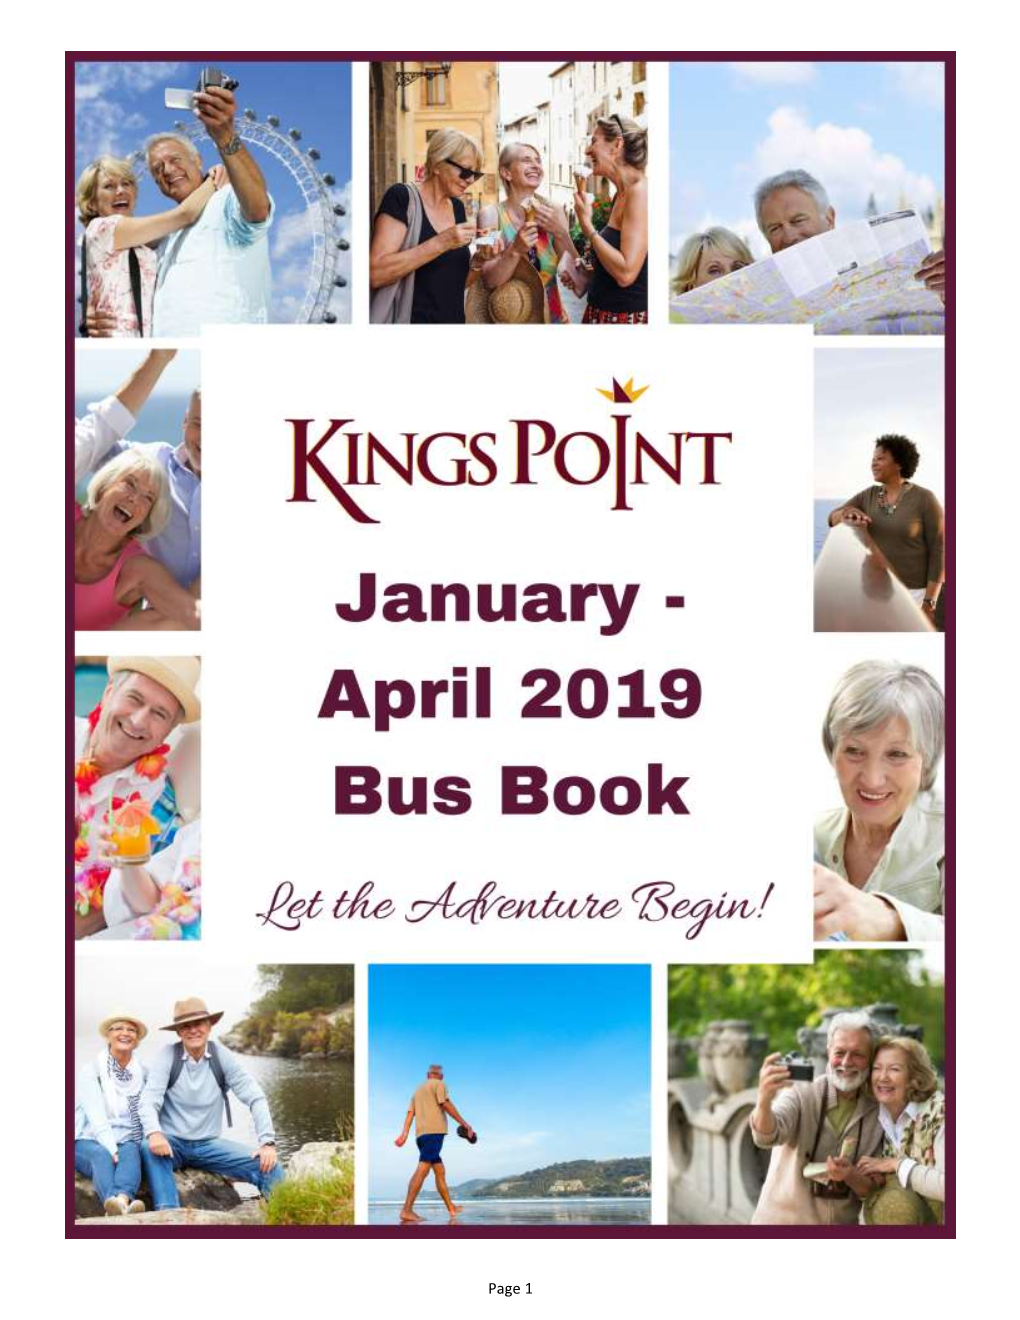 Bus Trip Information